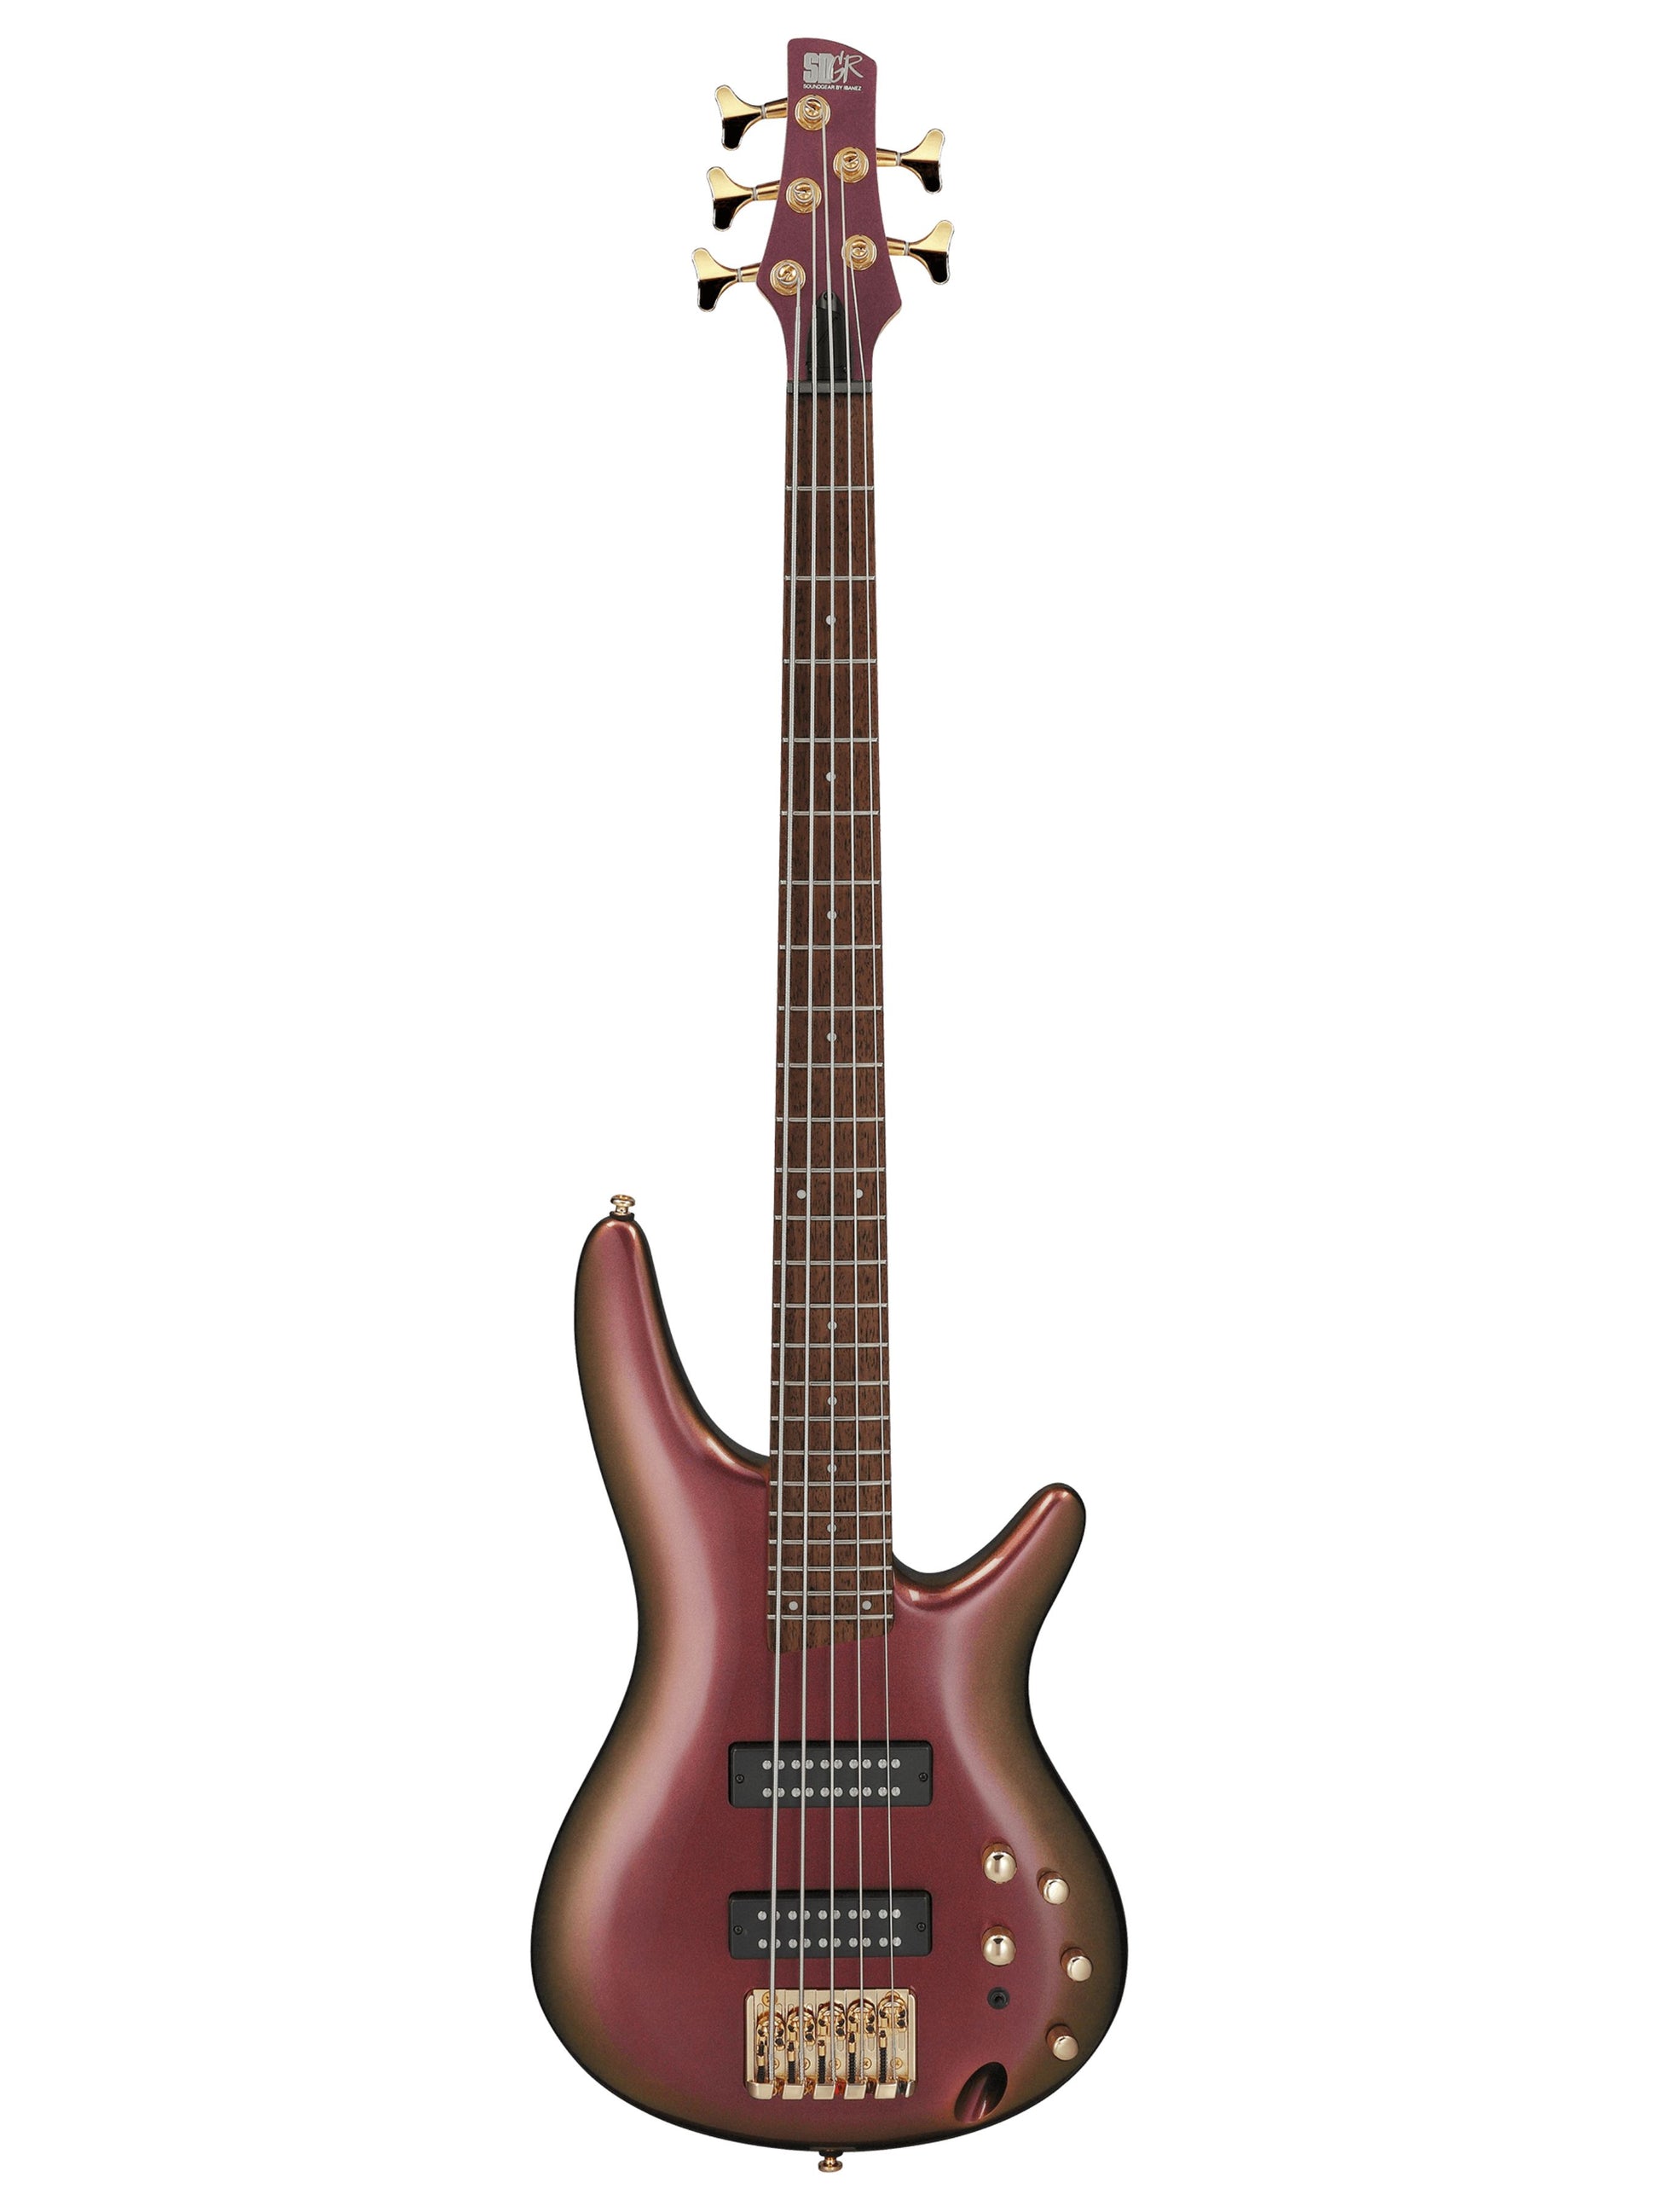 Ibanez SR305EDX 5-String Electric Bass, Rose Gold Chameleon